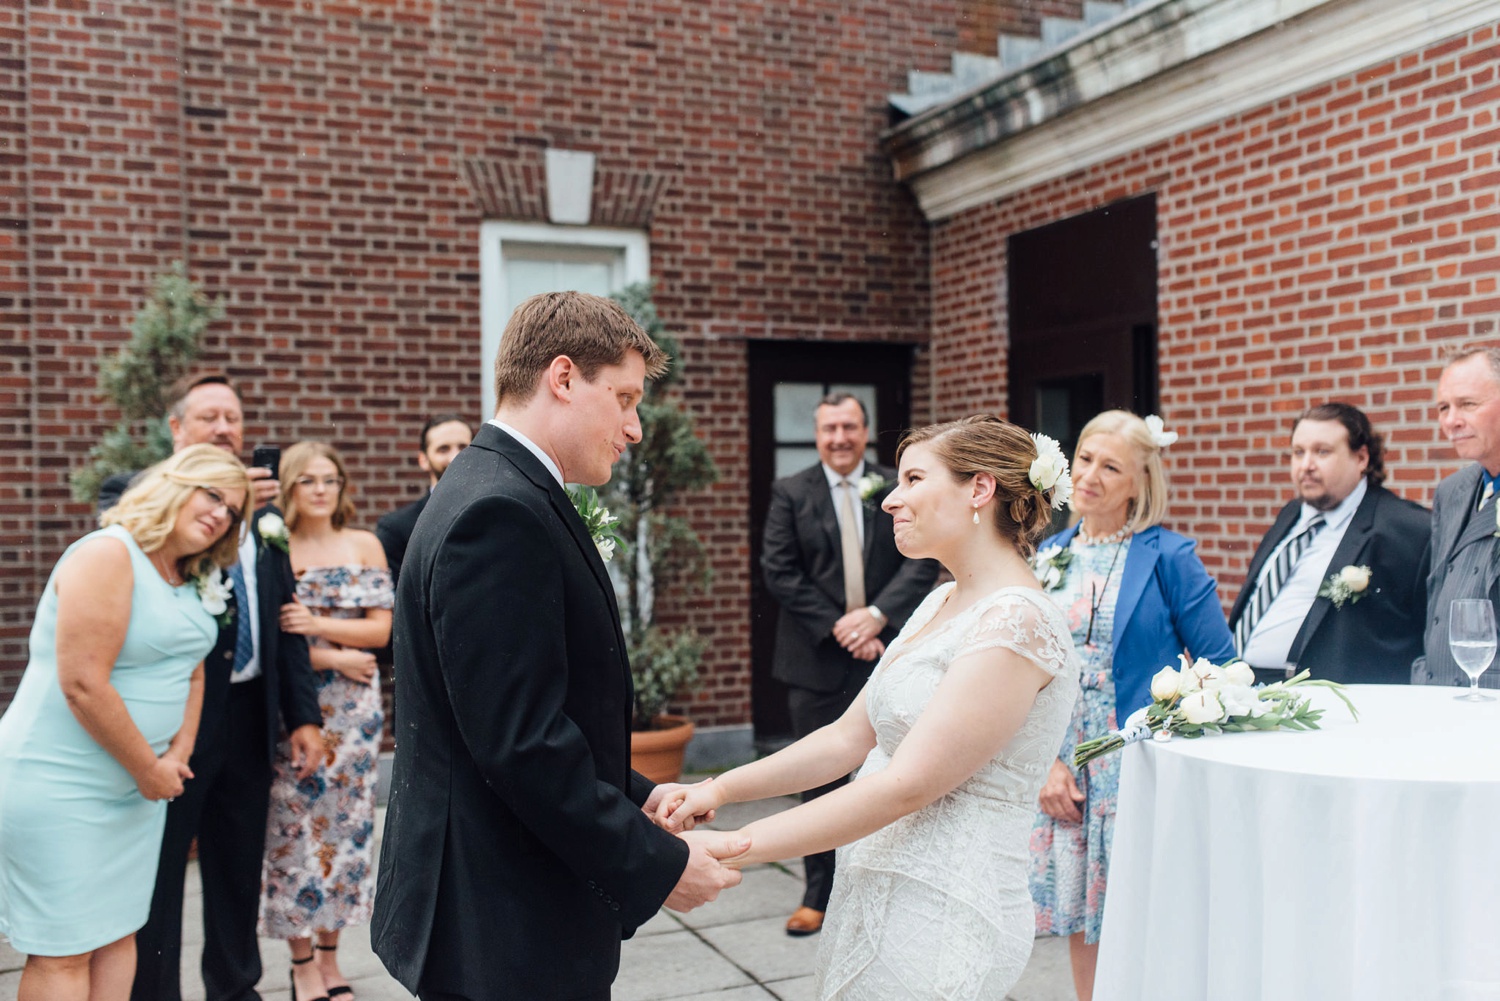 Hunter + Sue - Davio's Wedding Ceremony - Philadelphia Wedding Photographer - Alison Dunn Photography photo